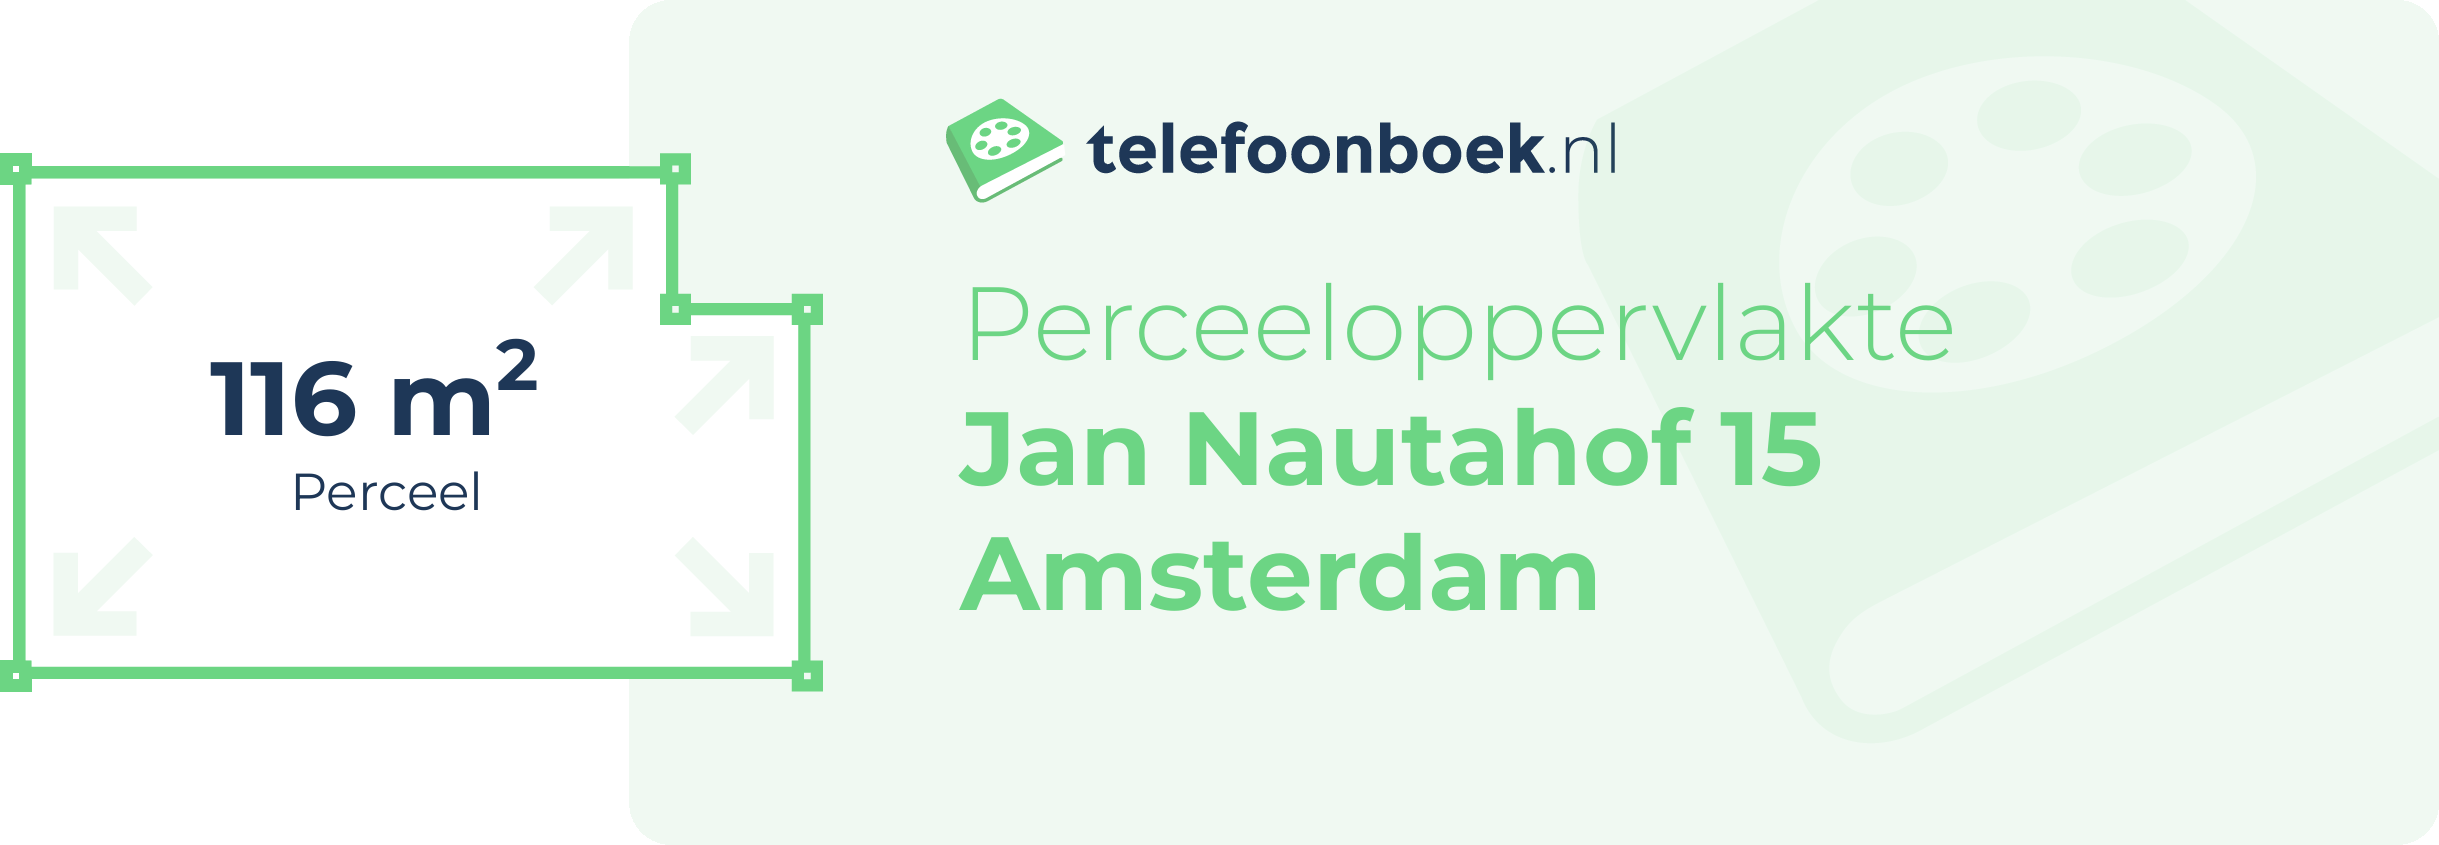 Perceeloppervlakte Jan Nautahof 15 Amsterdam